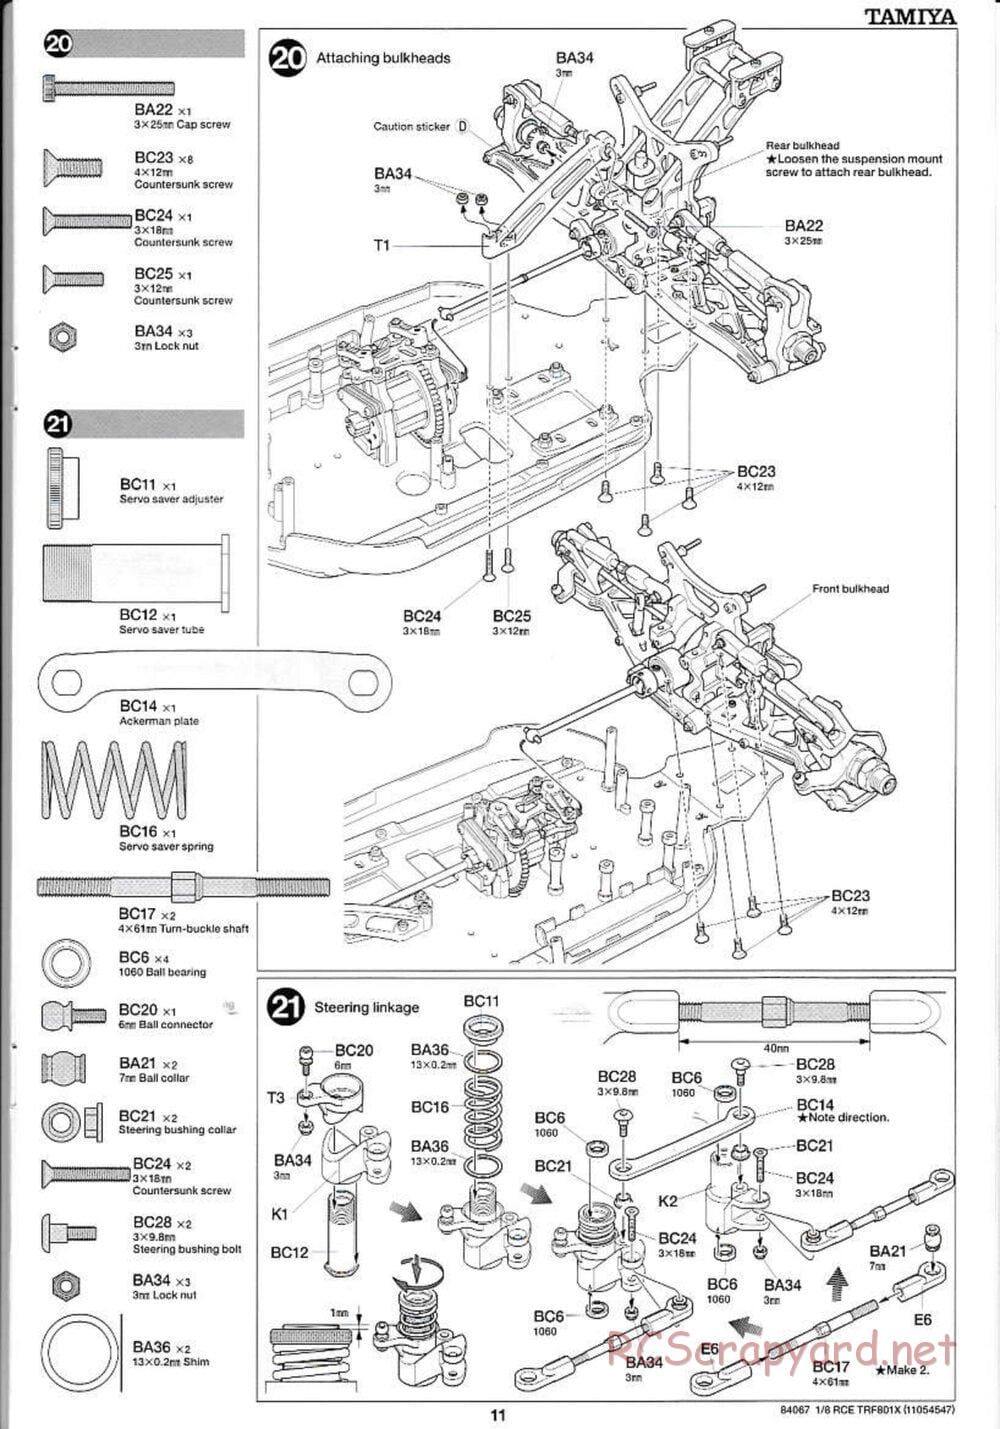 Tamiya - TRF801X Chassis - Manual - Page 11